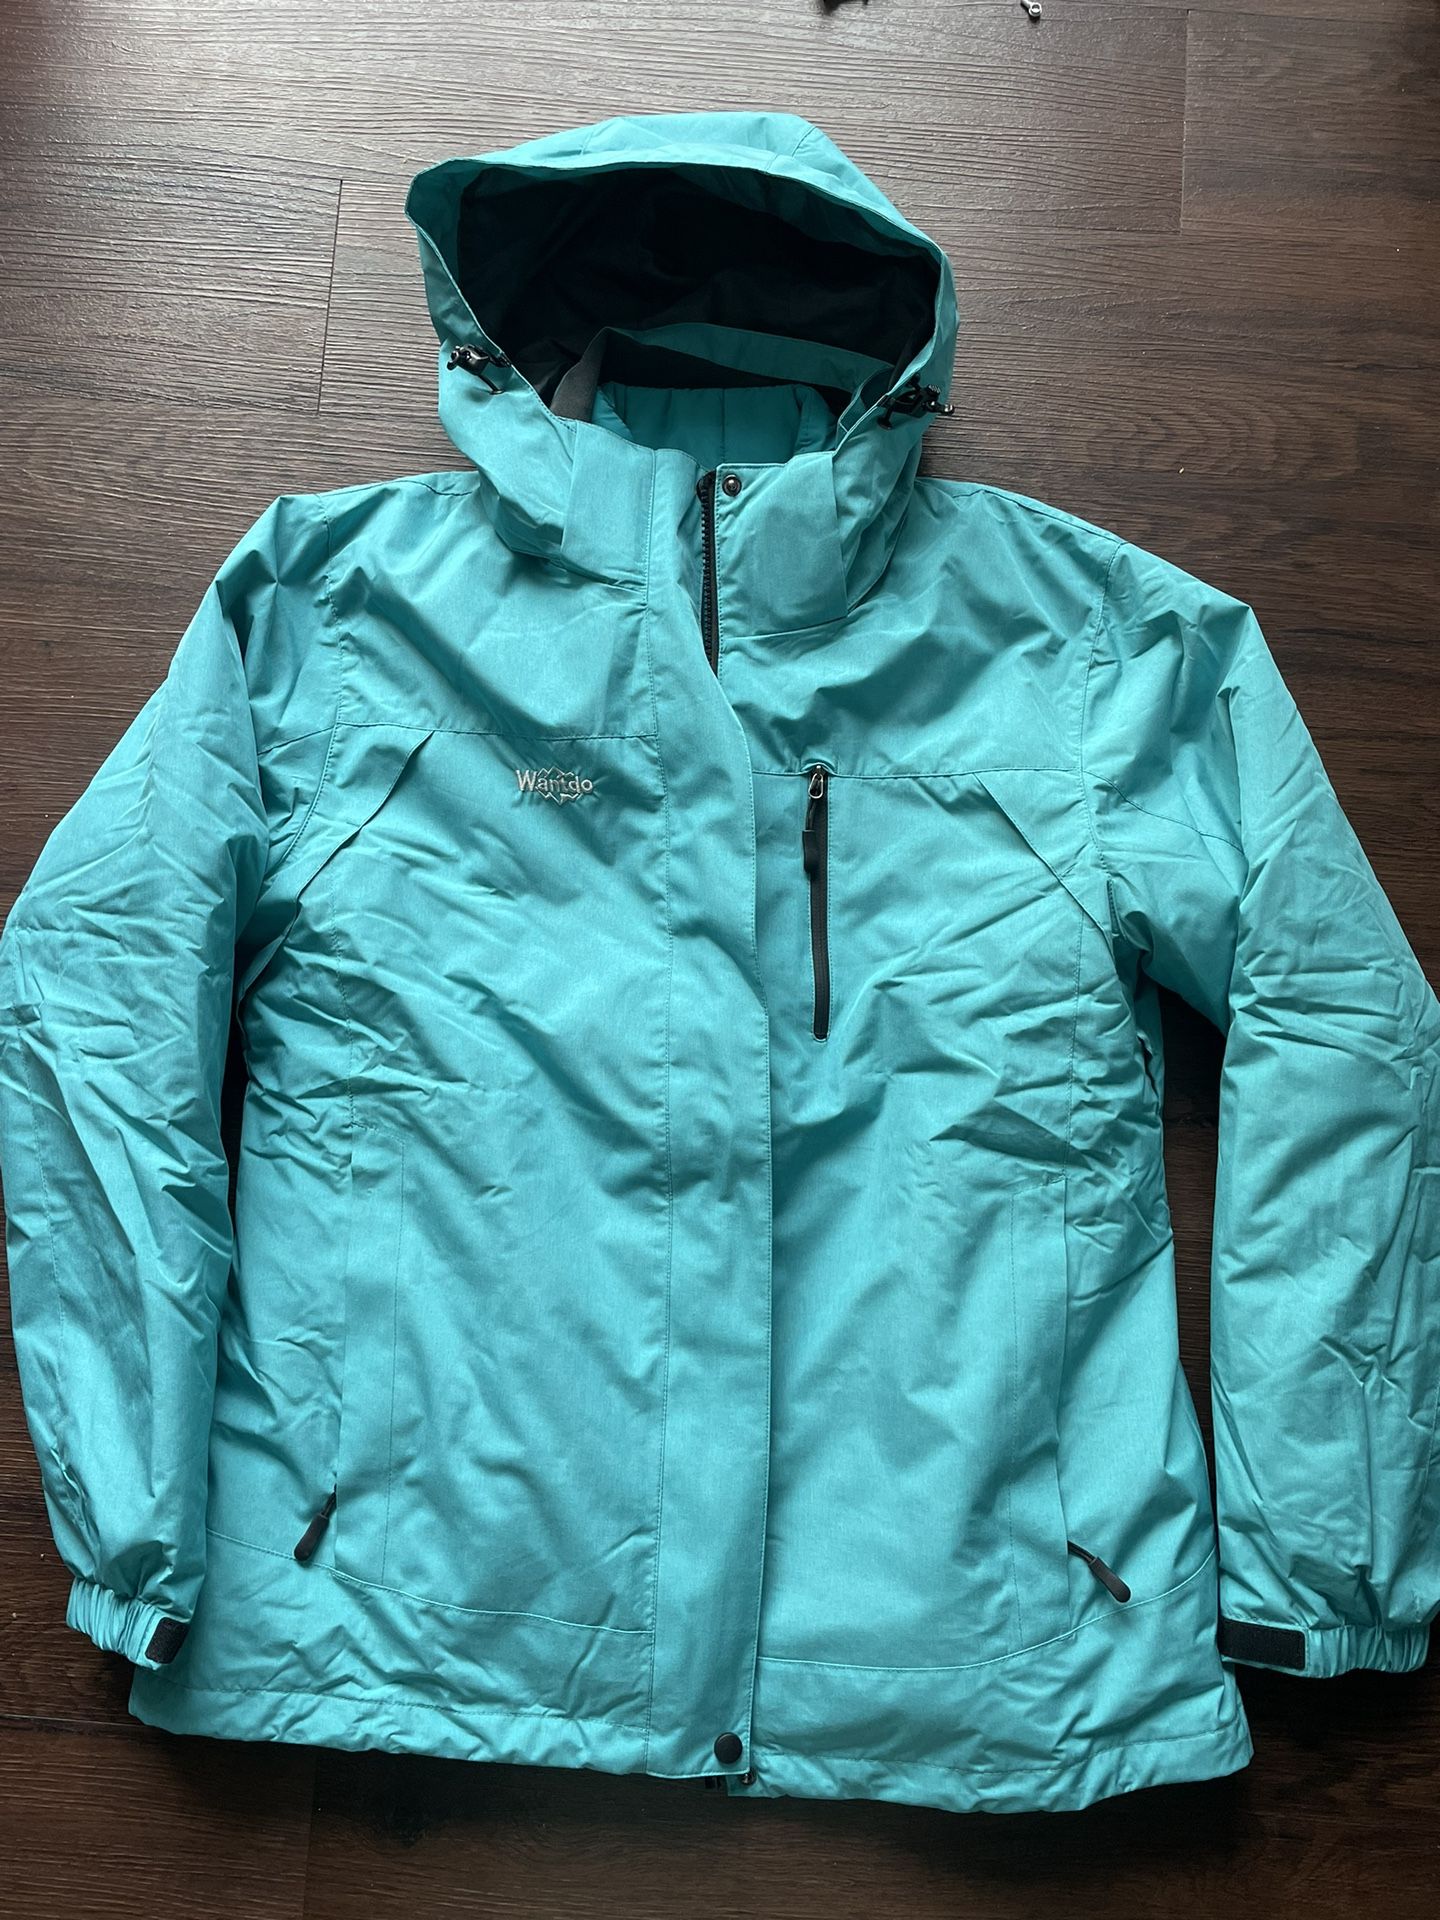 New Women's Waterproof Winter Coat Ski Jacket & Snow Rain Jacket with Hood Atna Core, size L